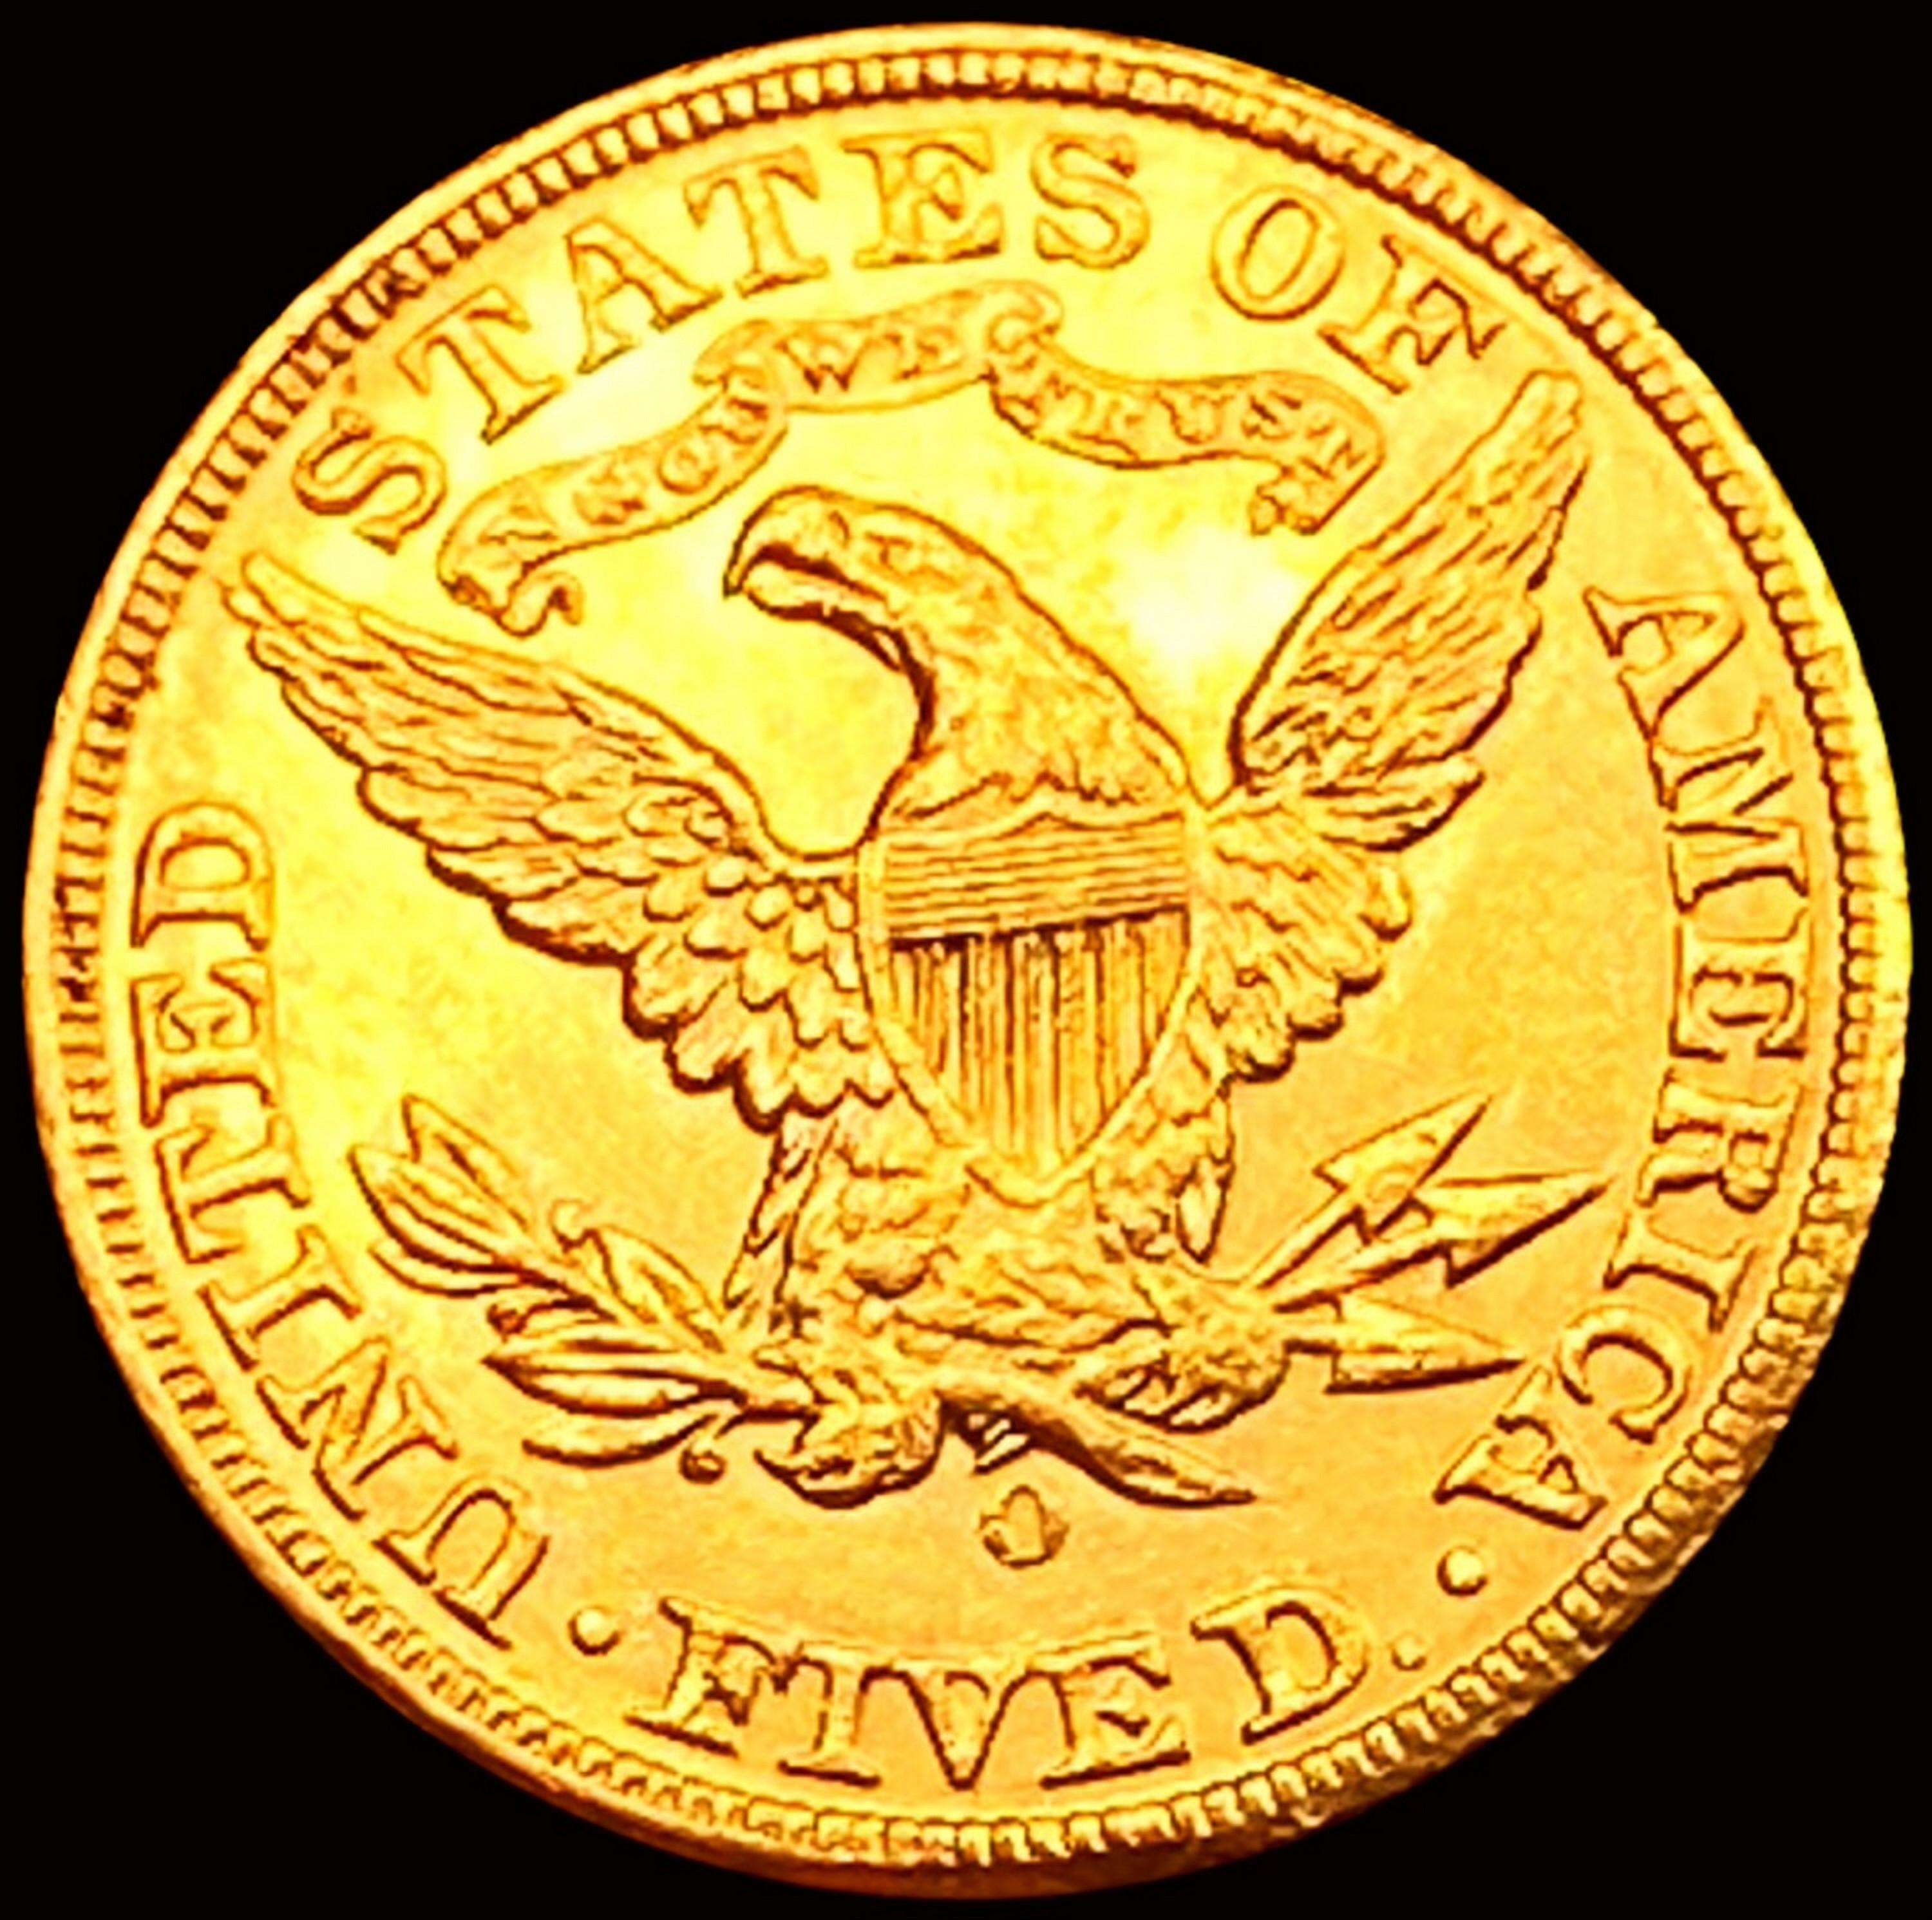 1894-O $5 Gold Half Eagle CHOICE BU